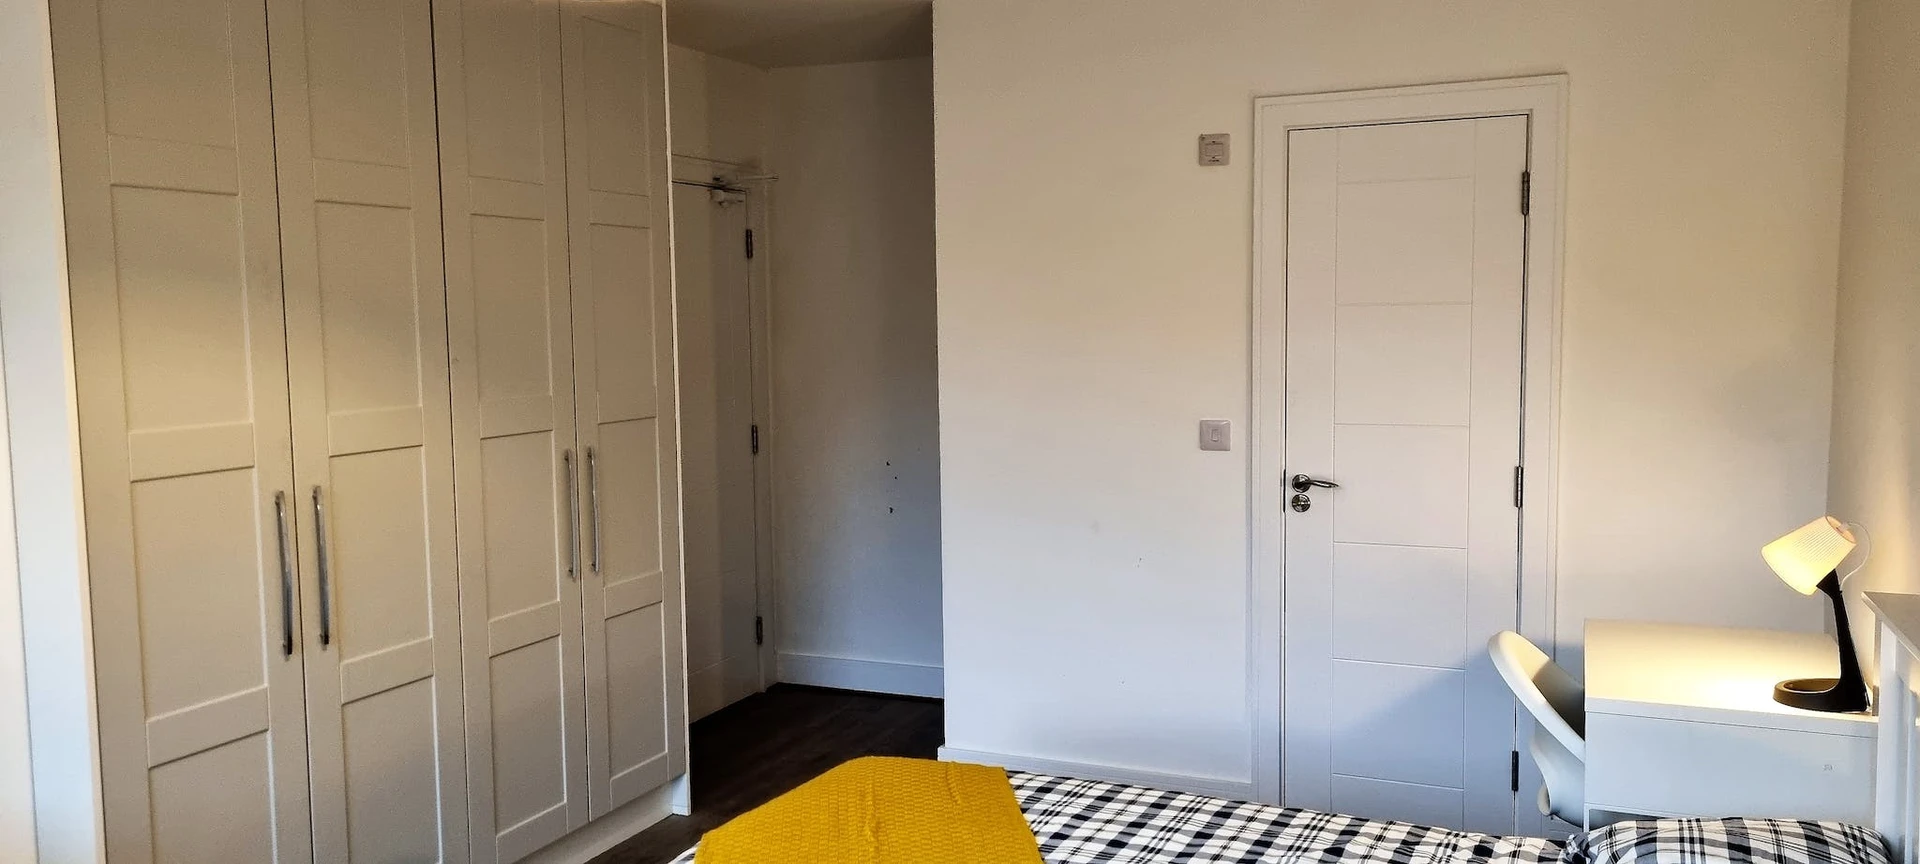 Cheap shared room in Dublin